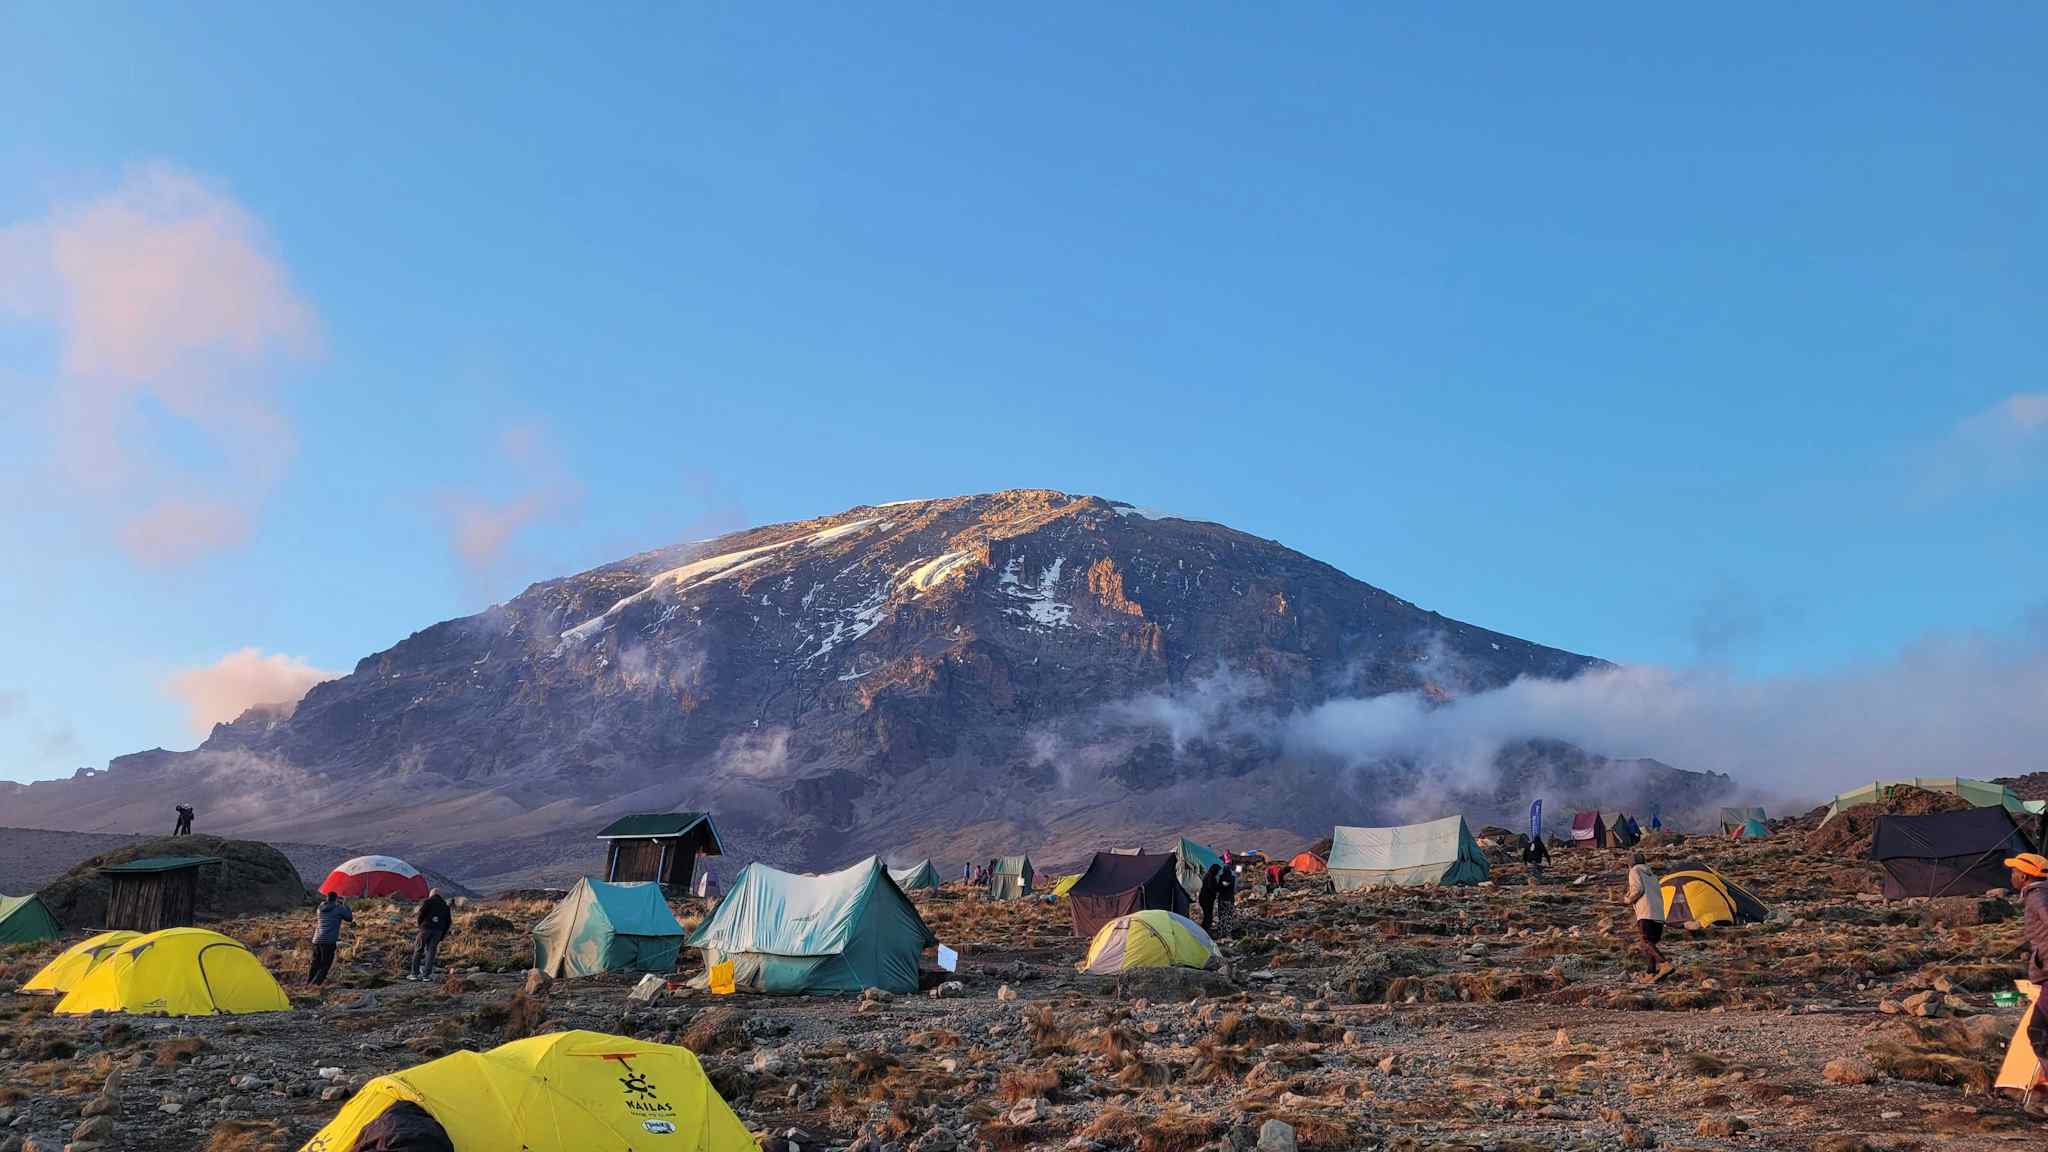 View of Karanga Camp with the summit of Mount Kilimanjaro in the background, Tanzania.